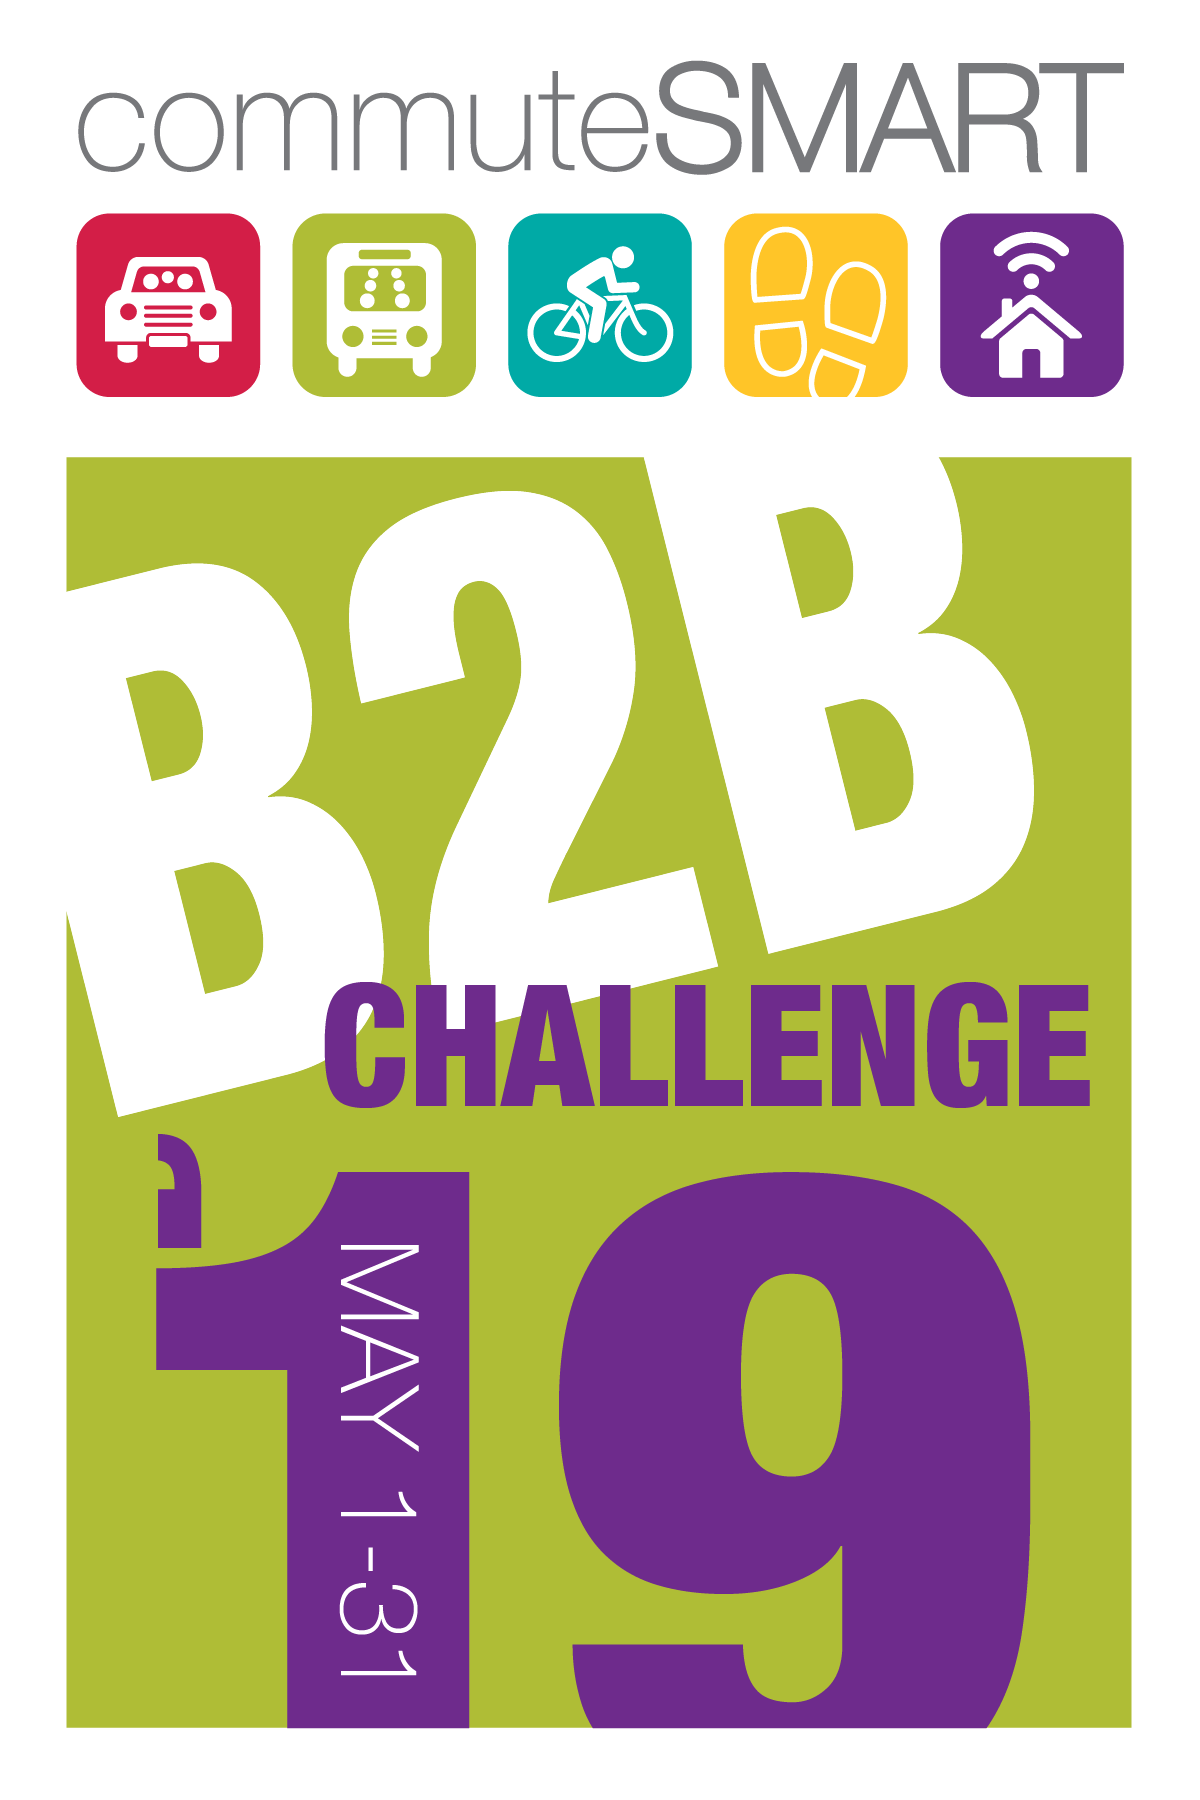 Commute Smart B2B Challenge